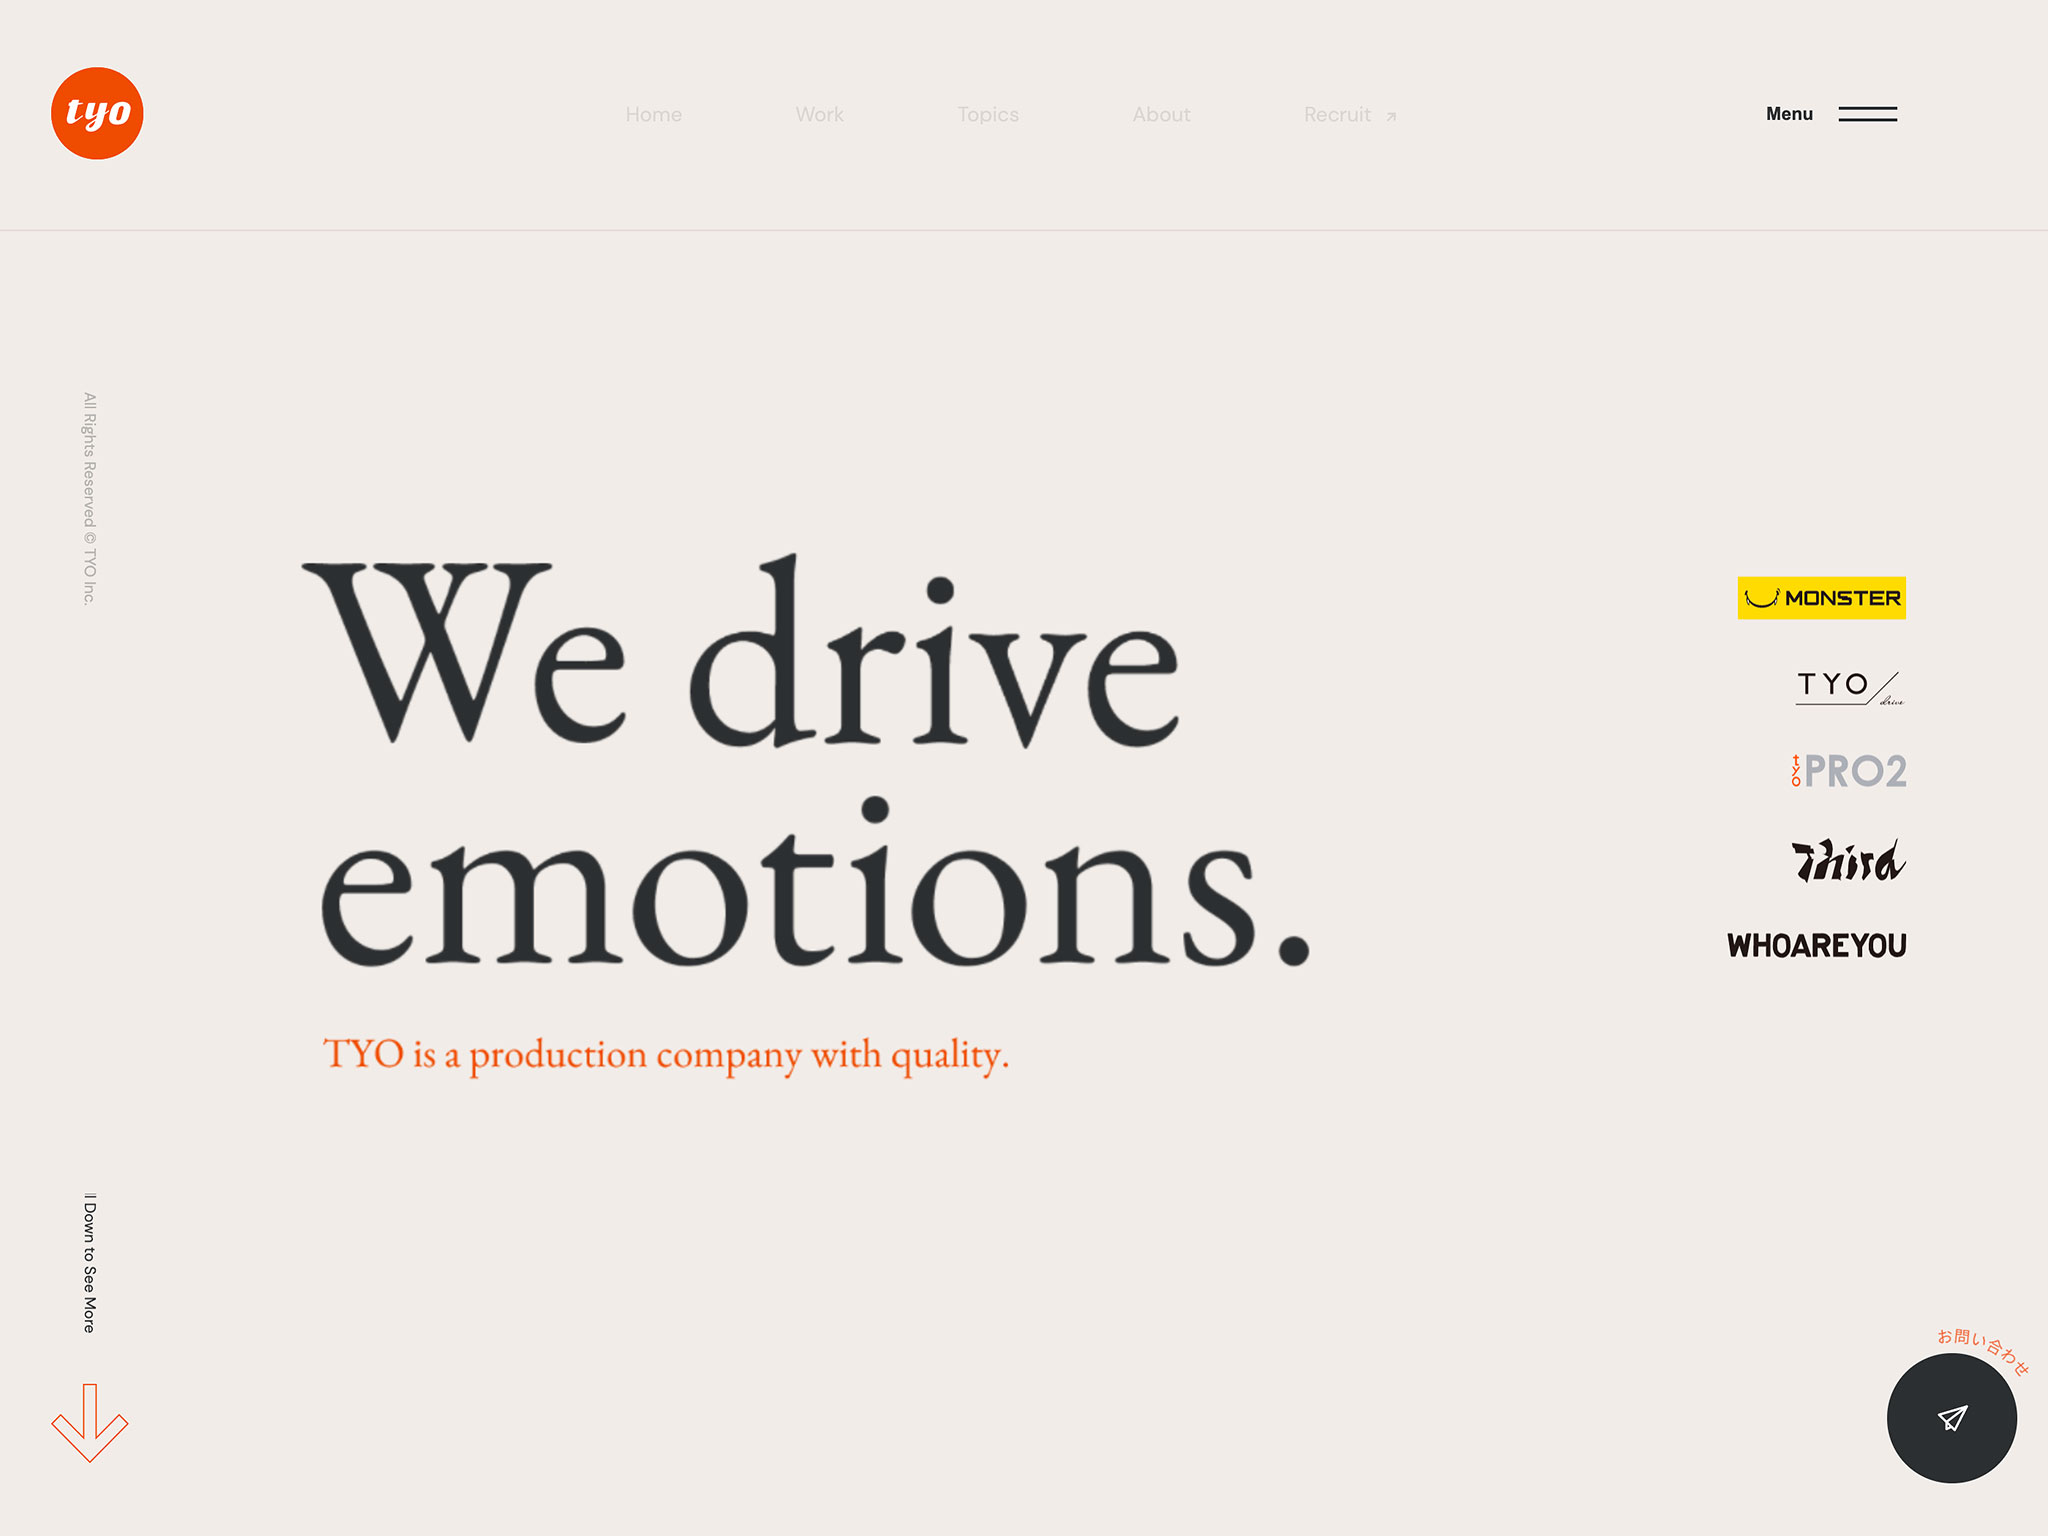 TYO – We drive emotions.